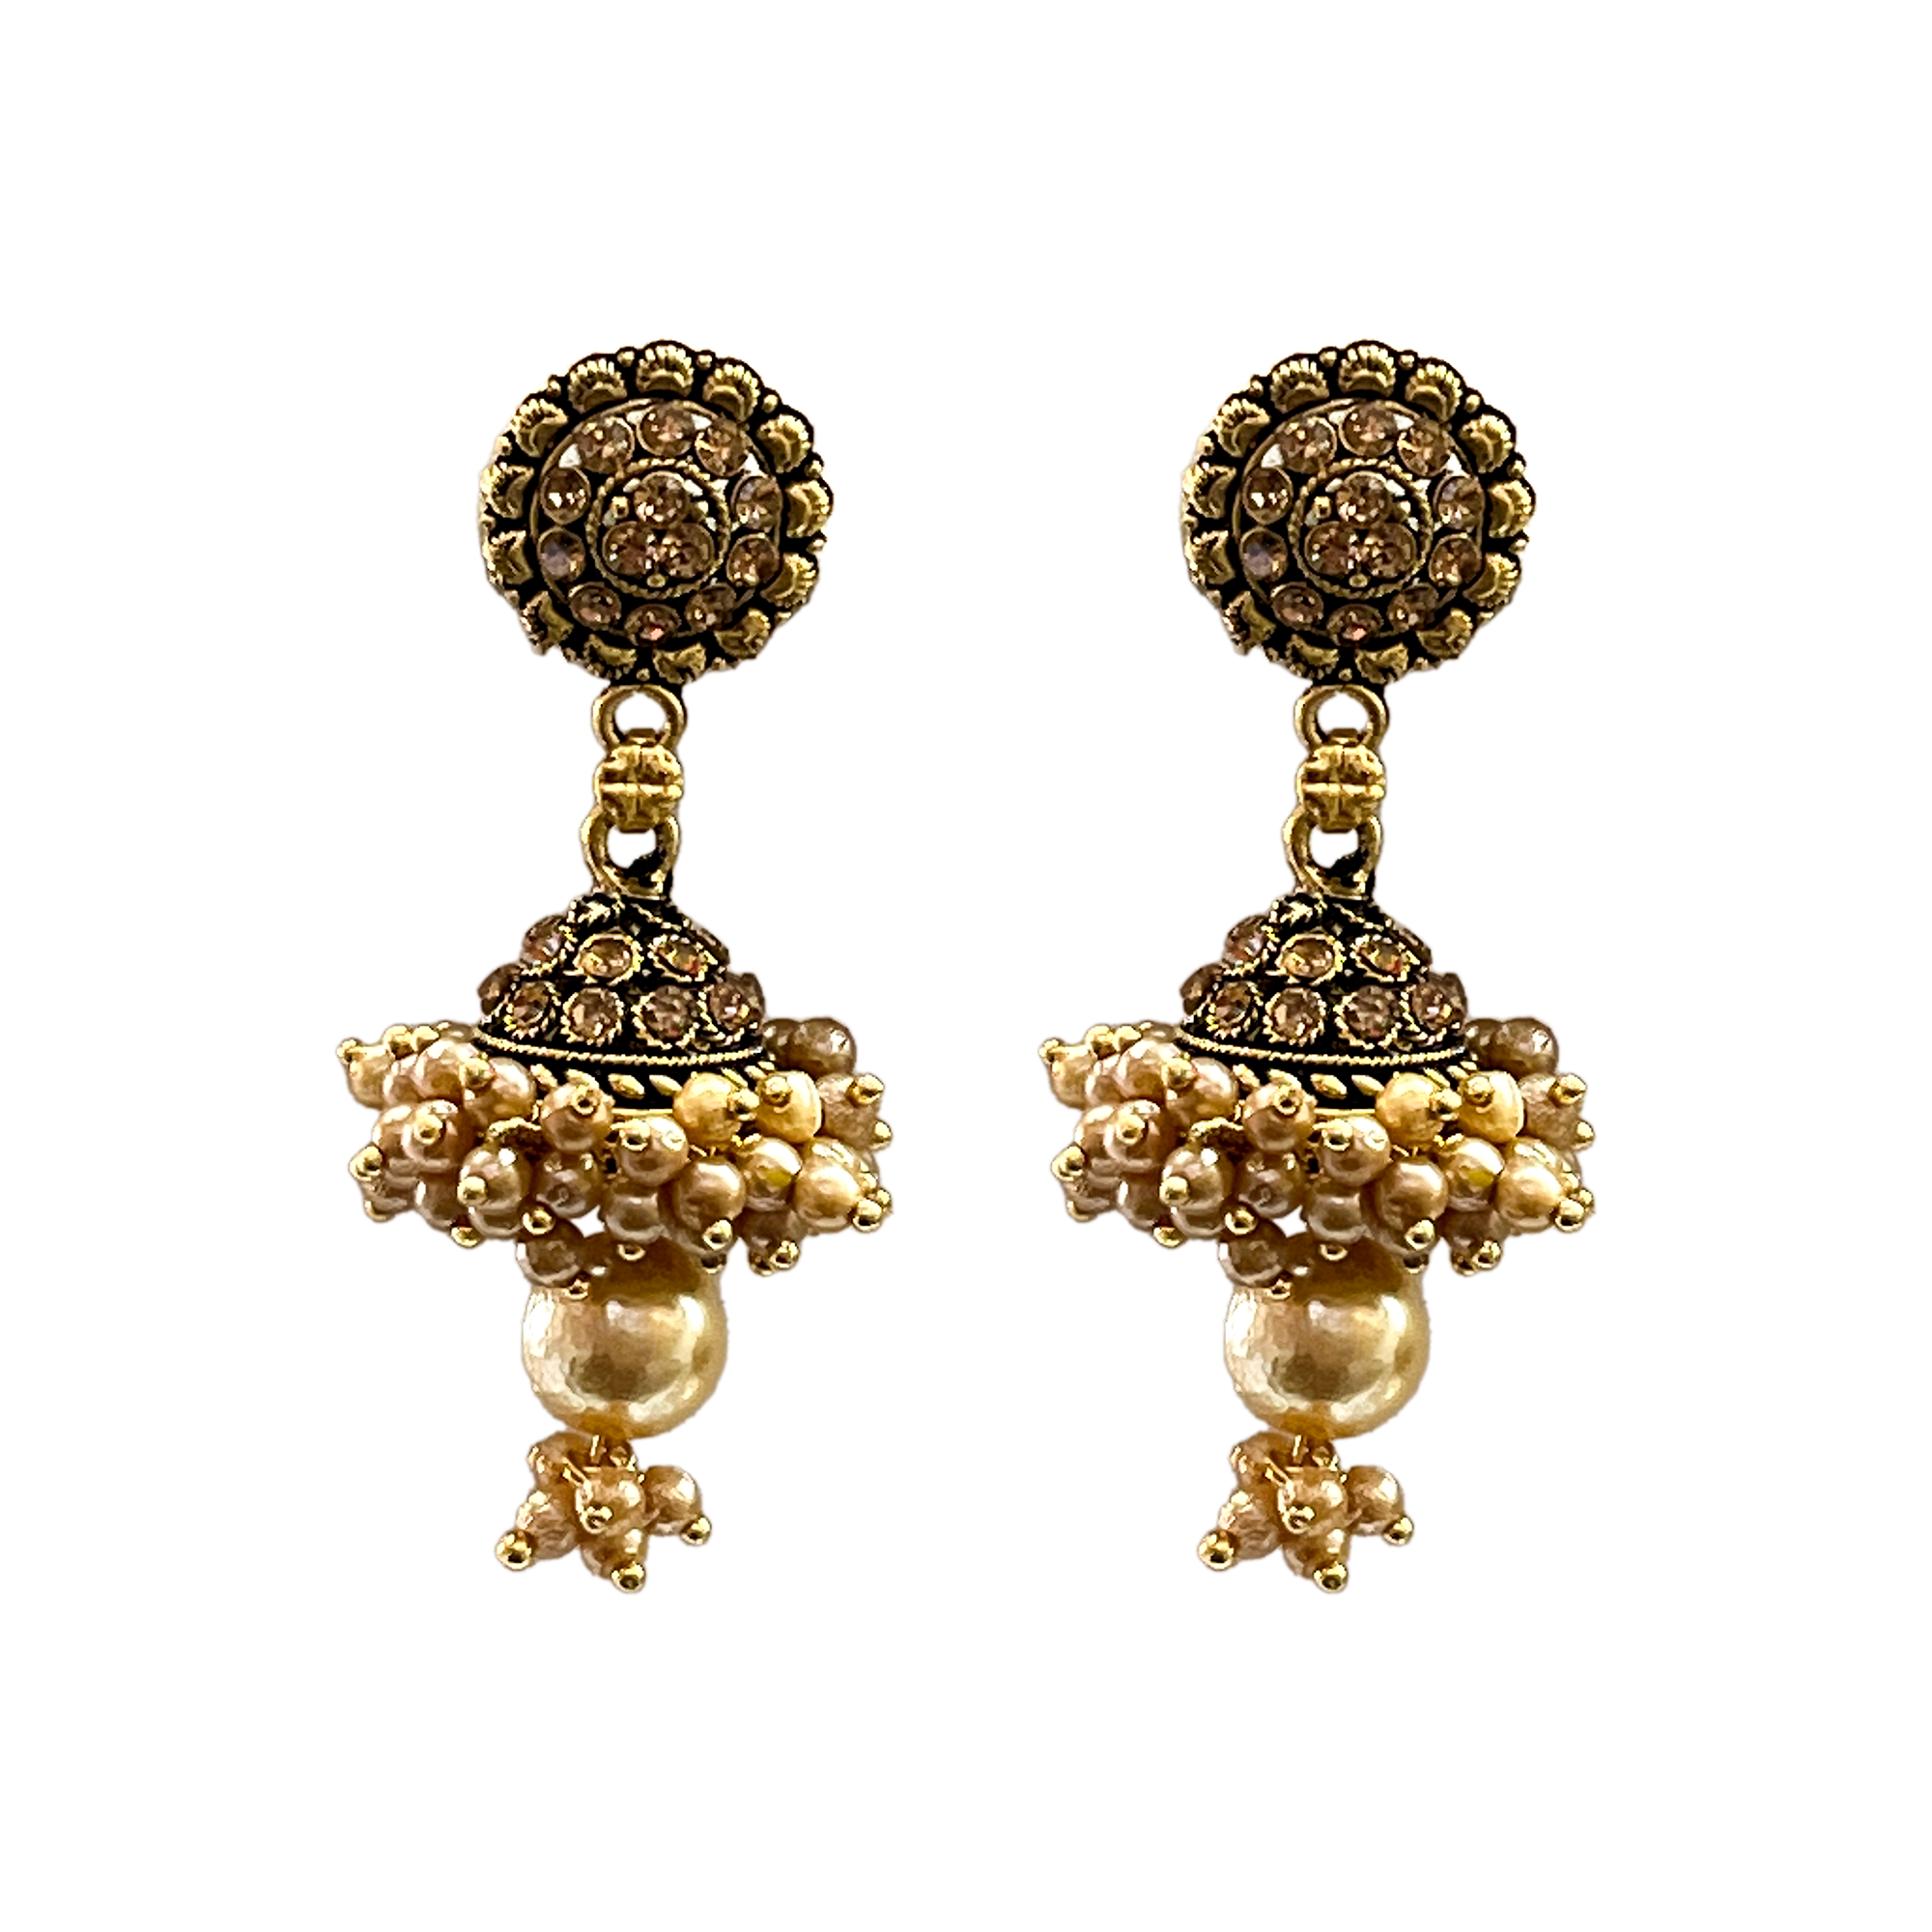 Beautiful Gold-Plated Jhumka Earrings